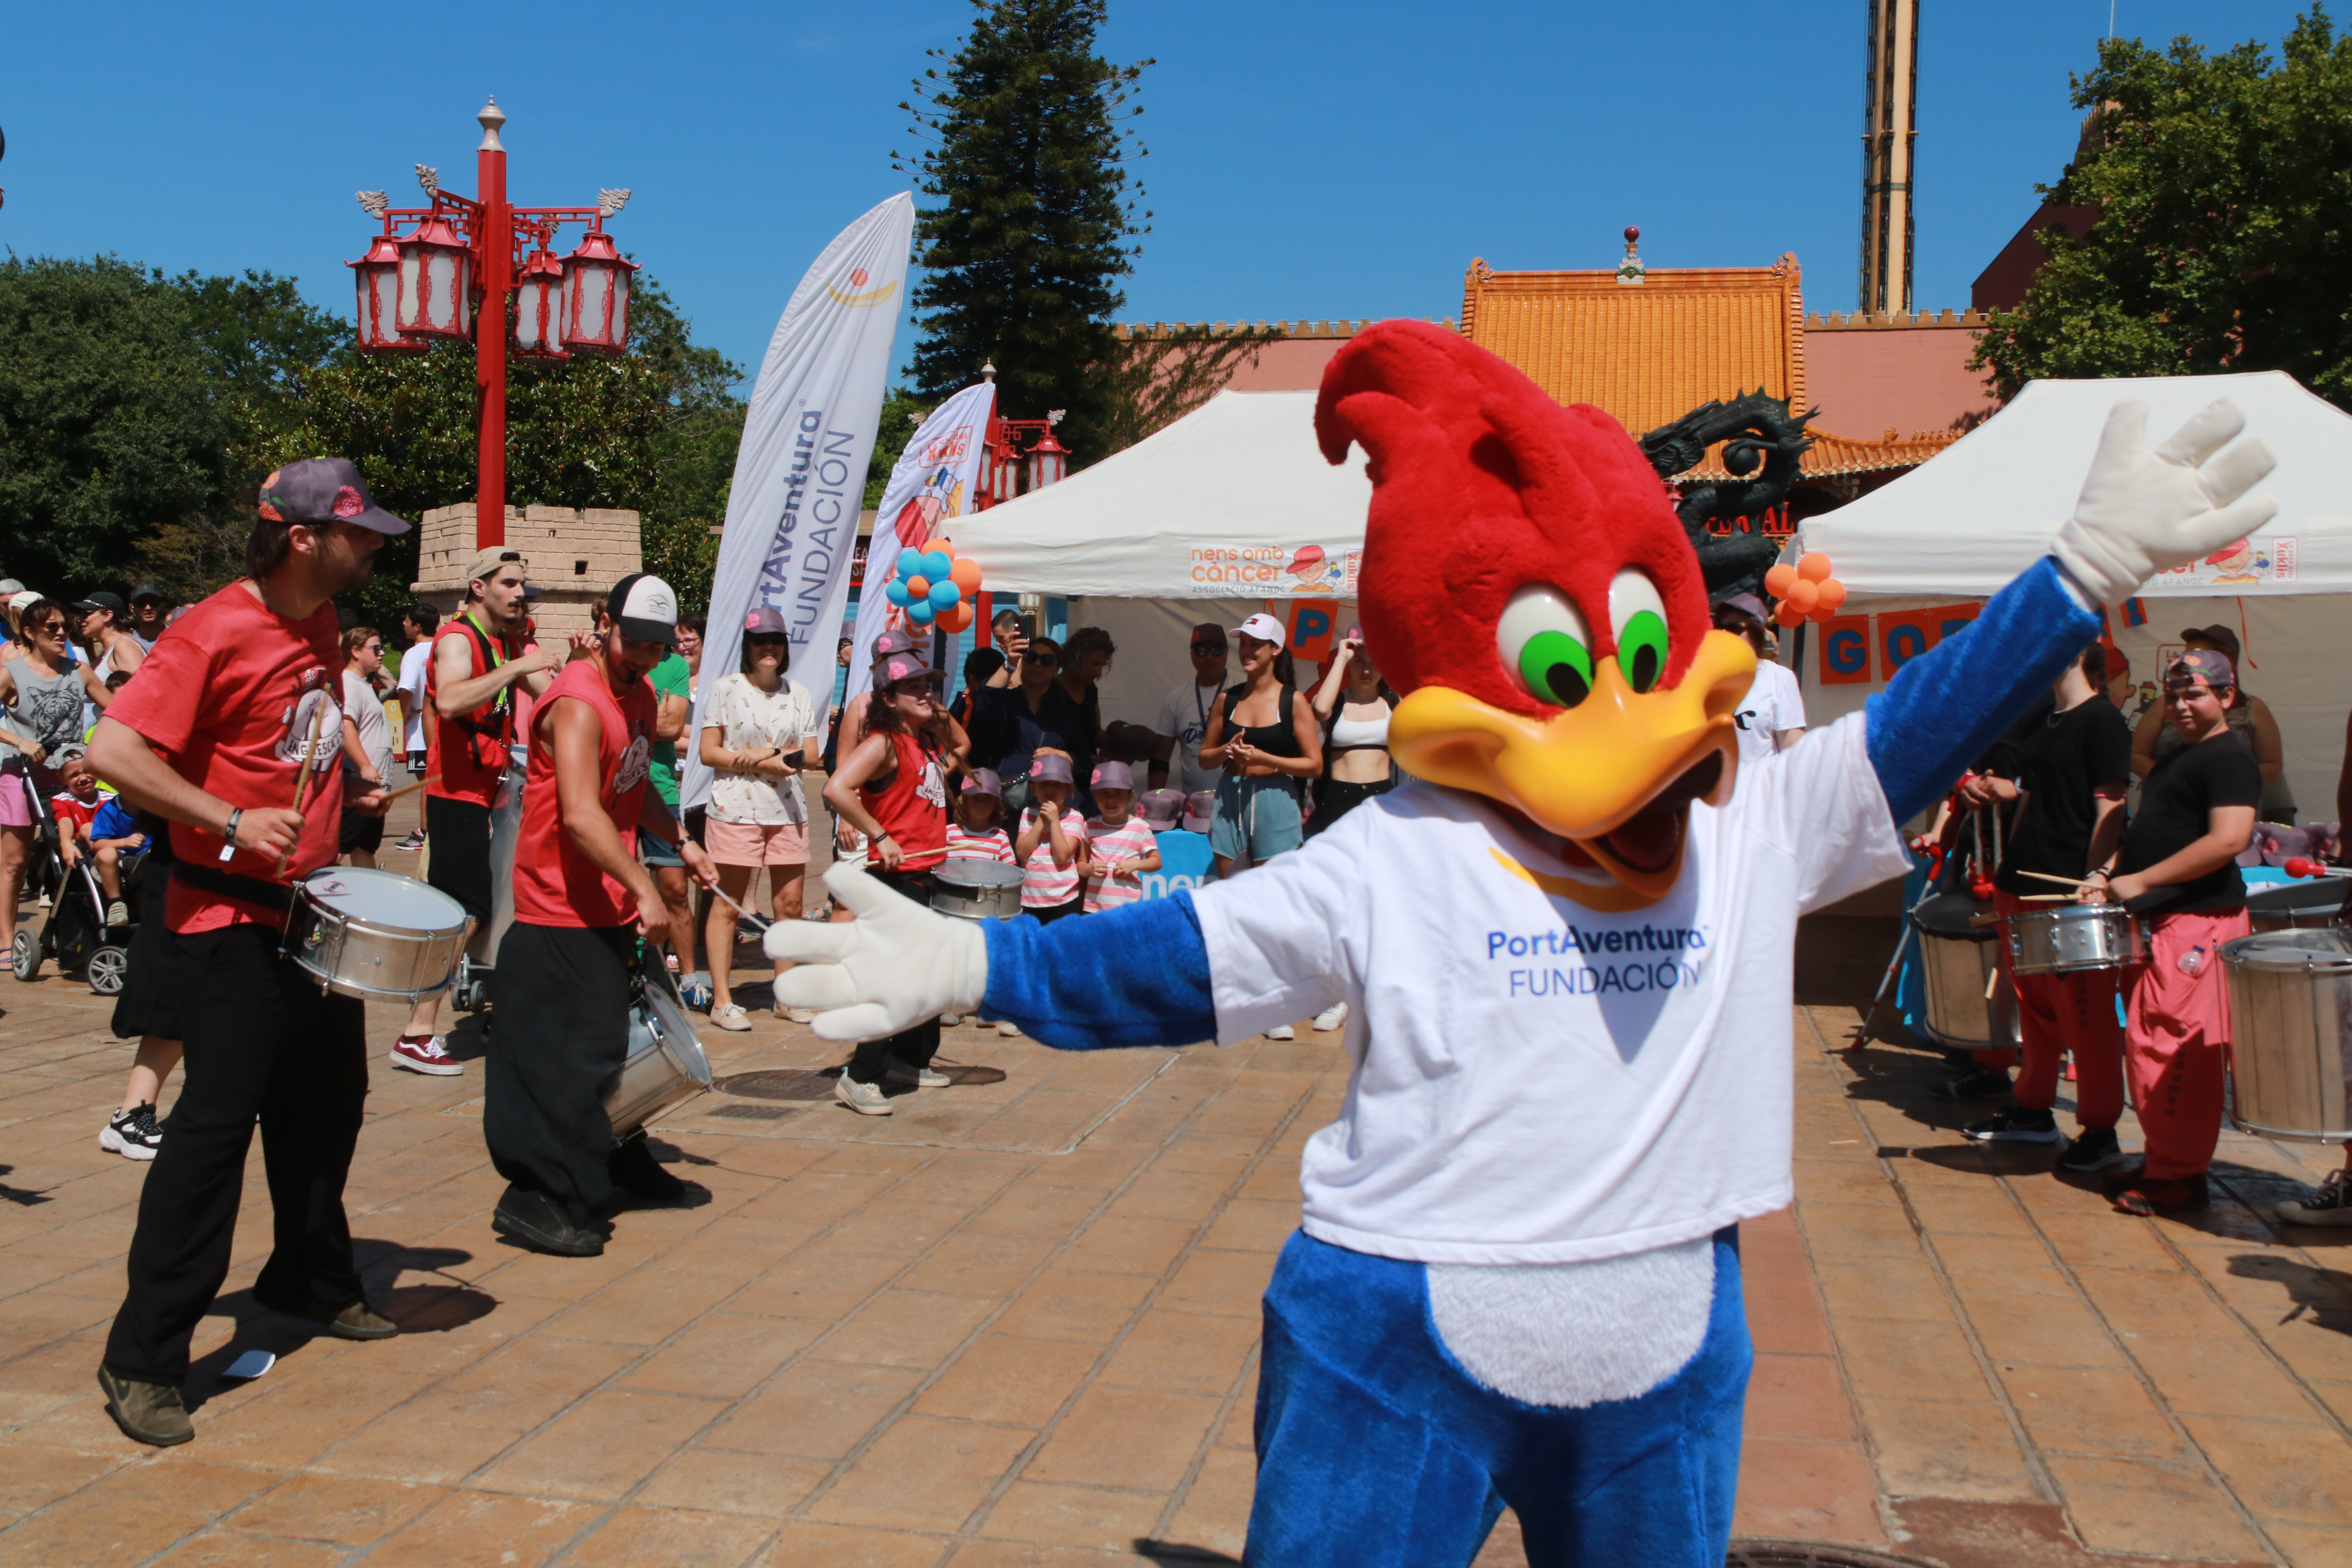 Woody Woodpecker, PortAventura's mascot